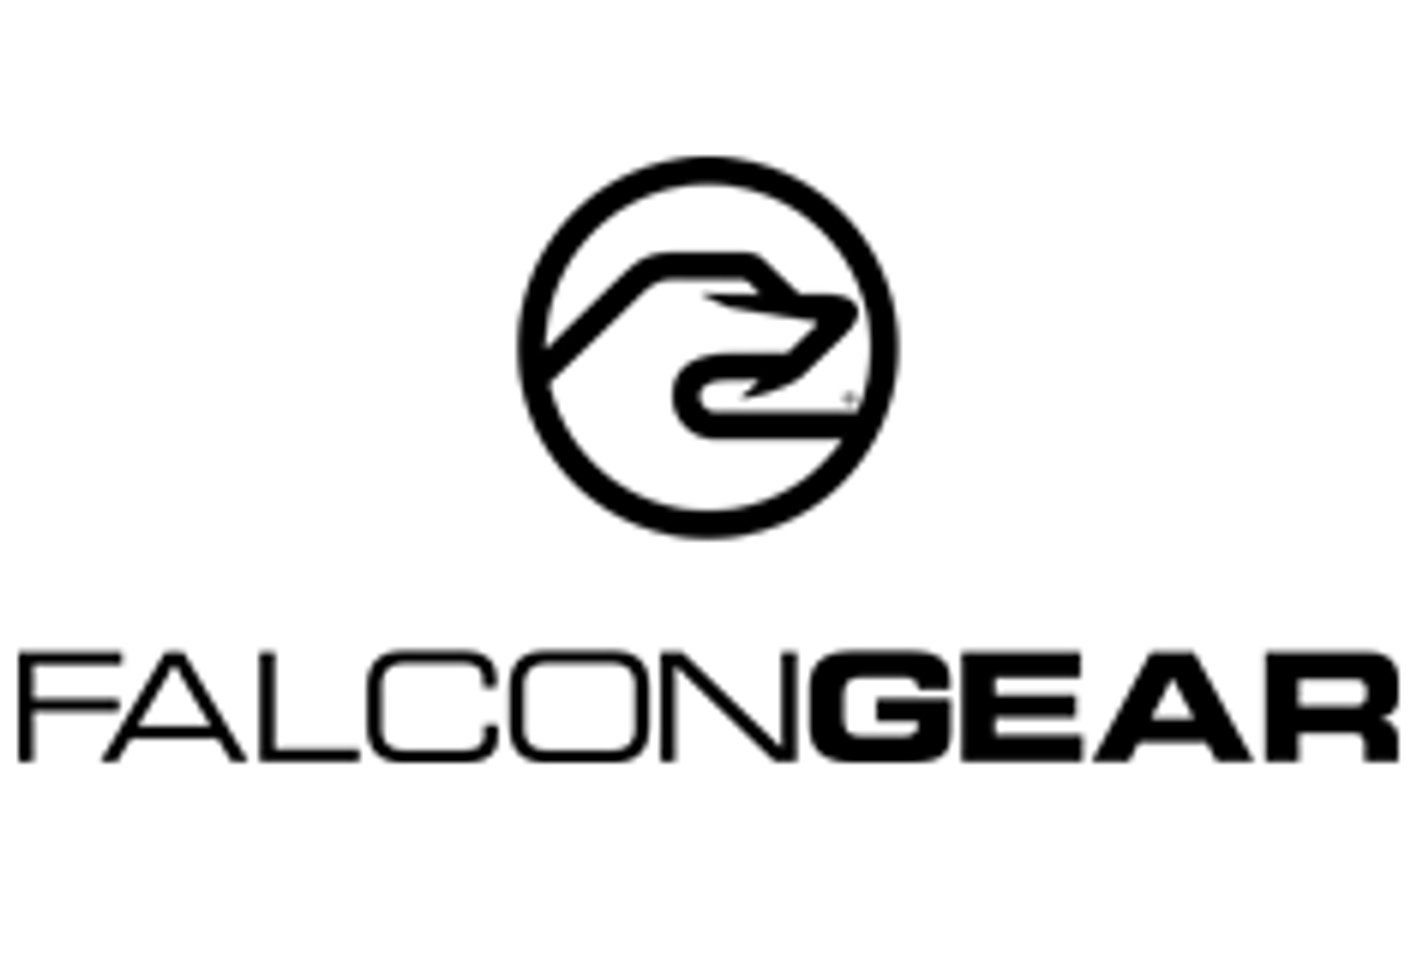 Company Profile: FalconGear